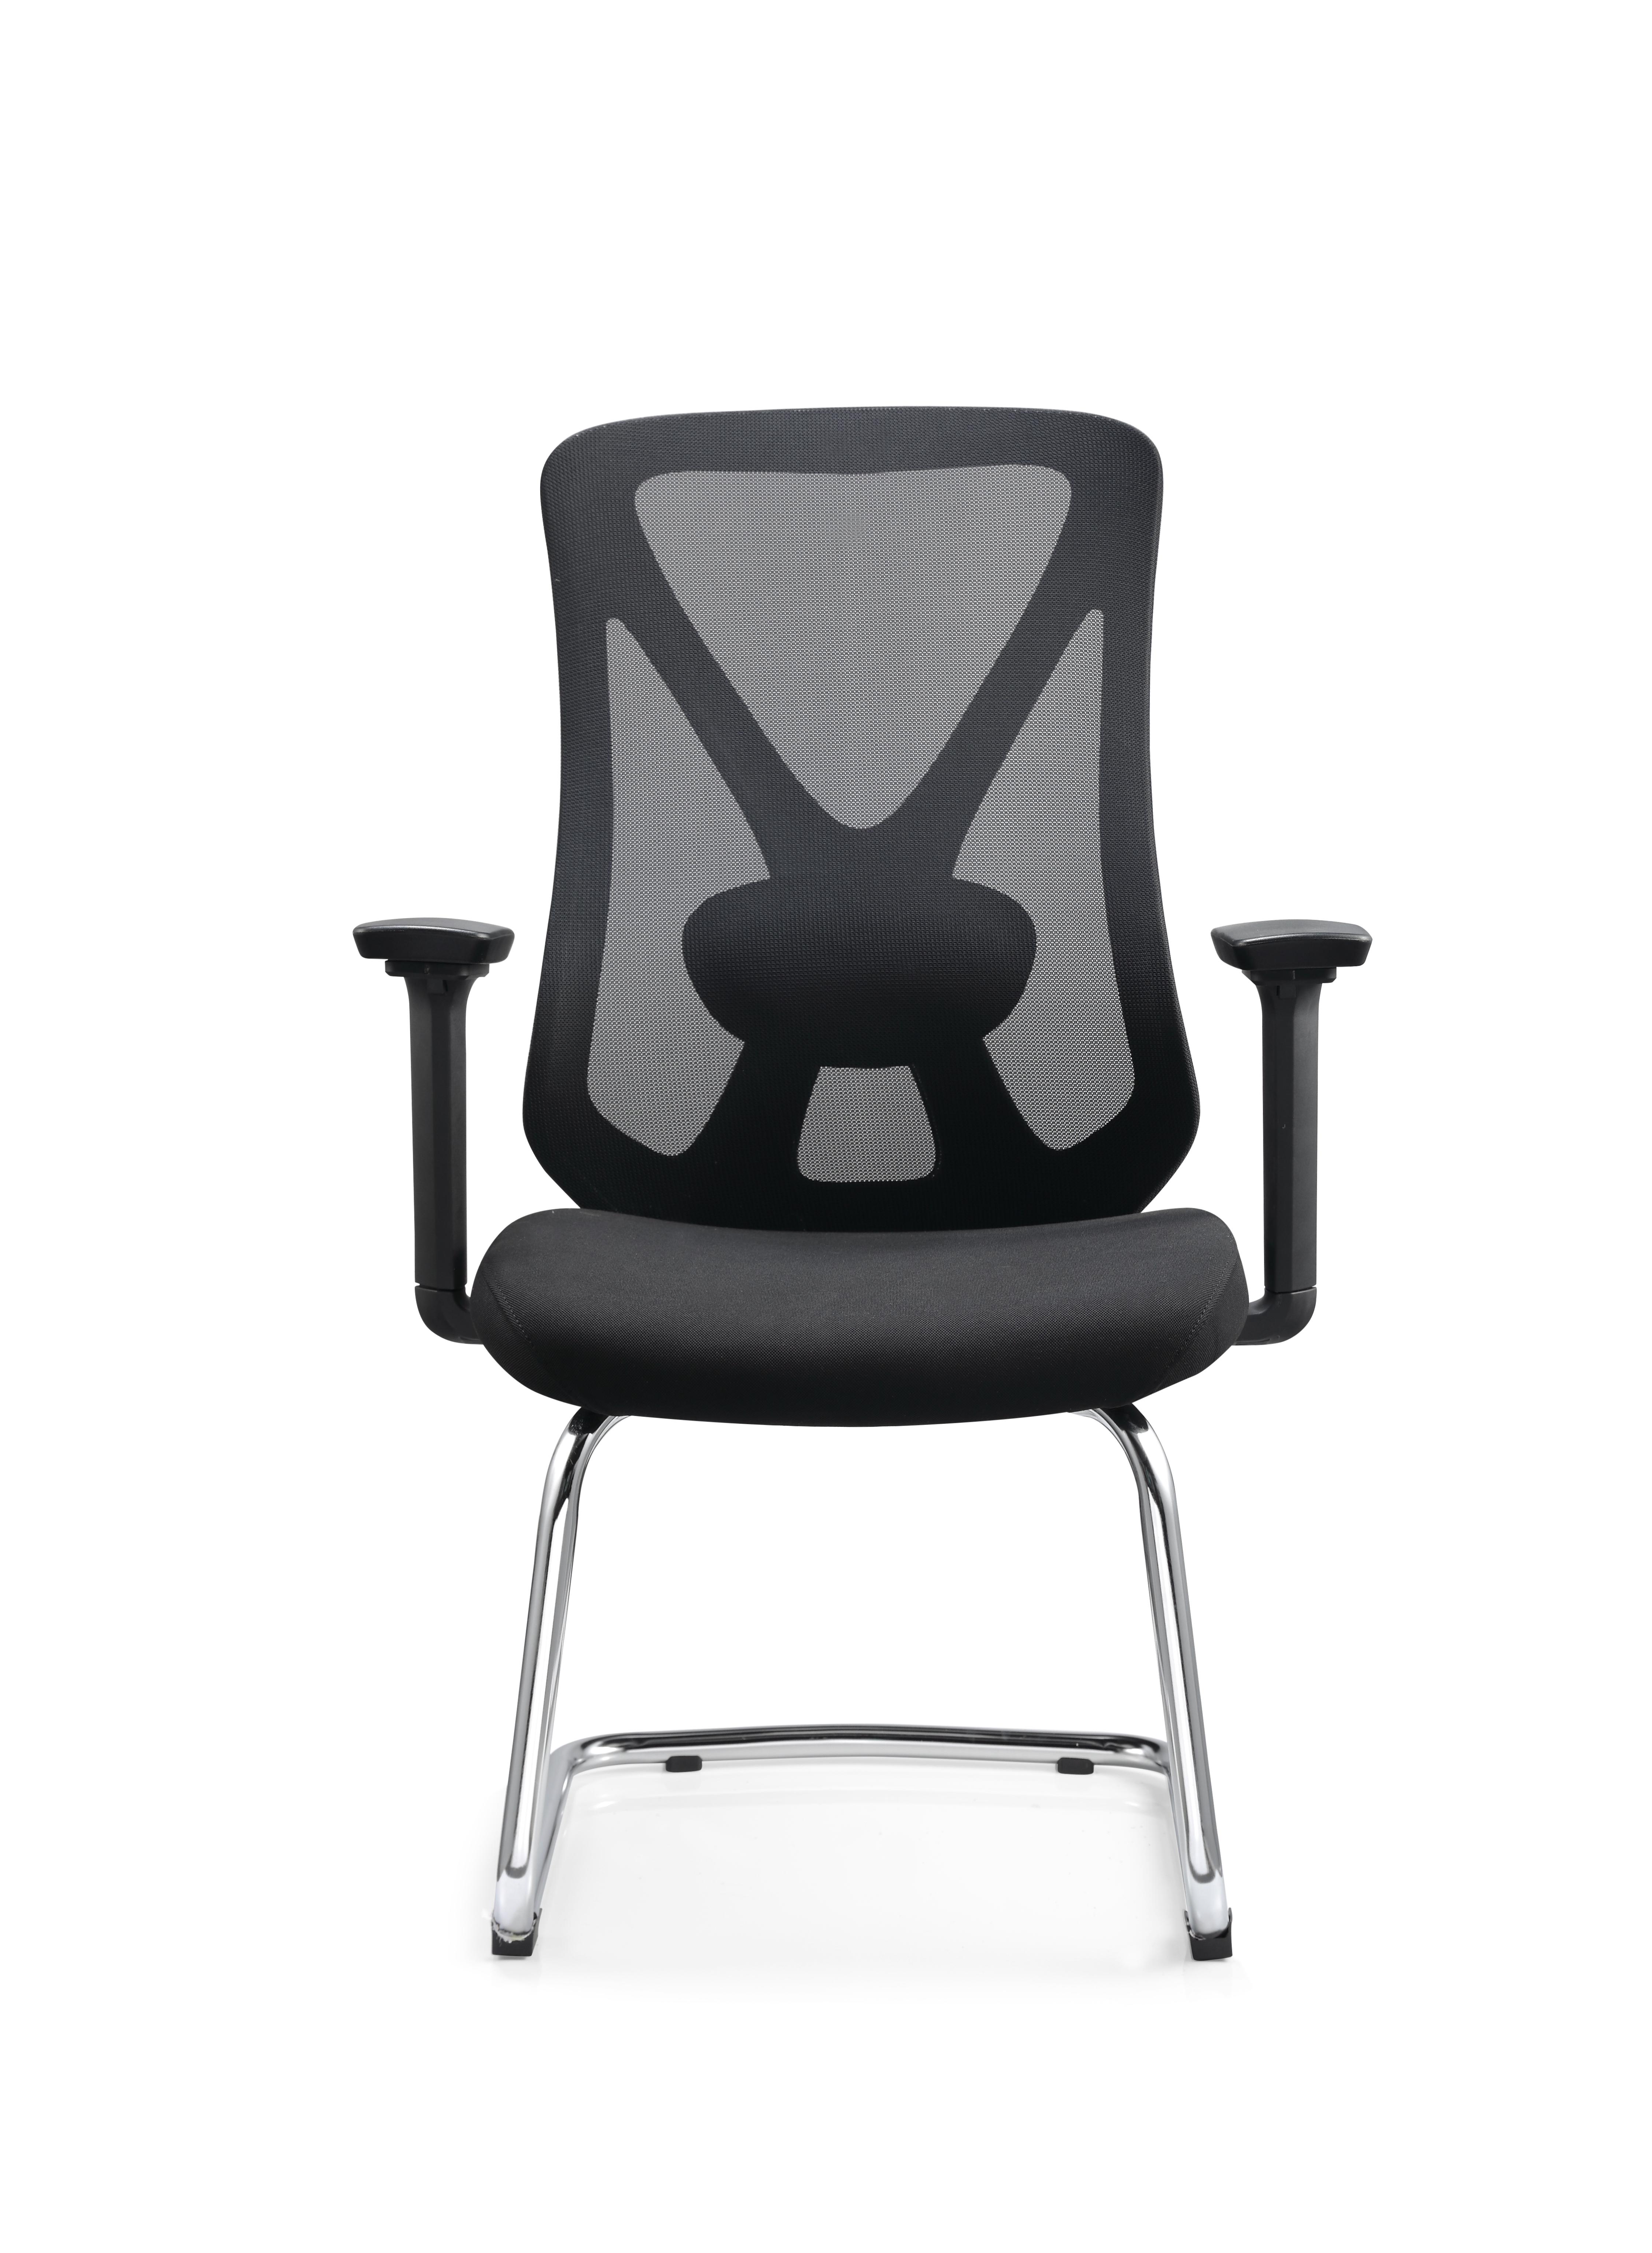 Newcity 629C Sedia per visitatori moderna con braccioli regolabili 3D Sedia per visitatori per ufficio di vendita diretta del produttore Sedia per visitatori di alta qualità Fornitore di sedie per visitatori esecutivi Foshan Cina